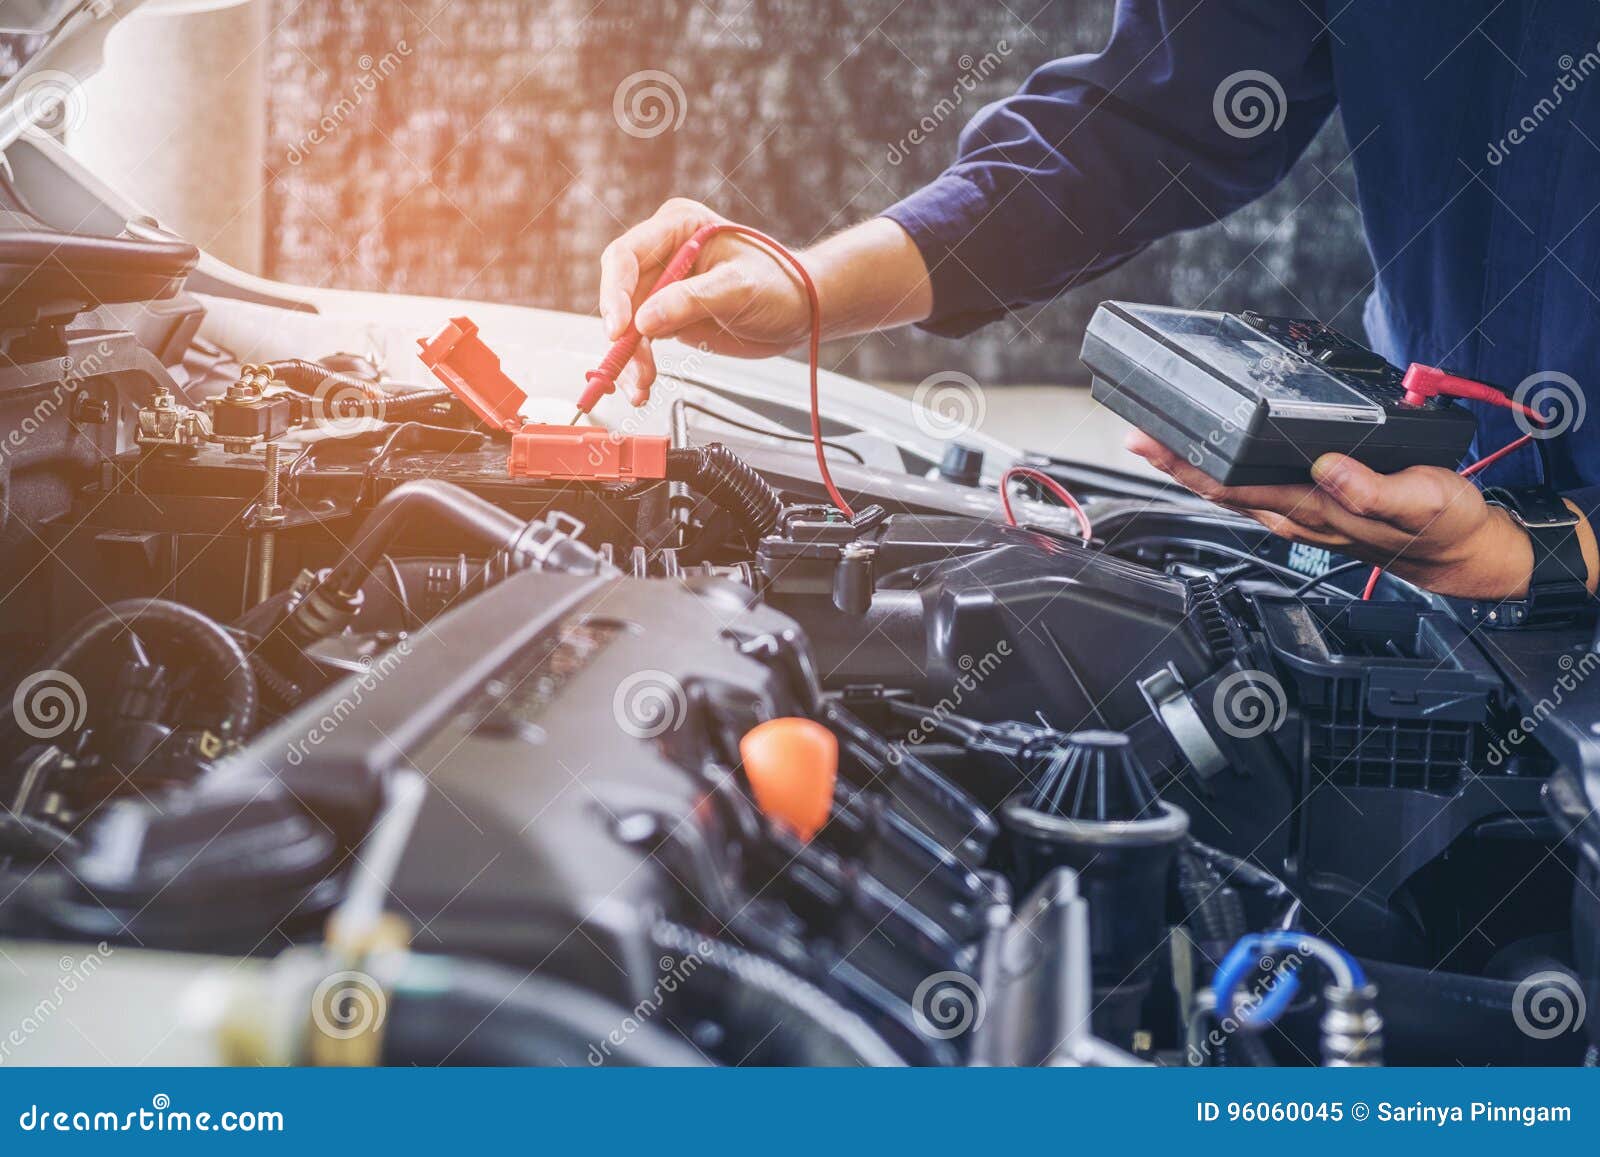 hands of car mechanic working auto repair service.